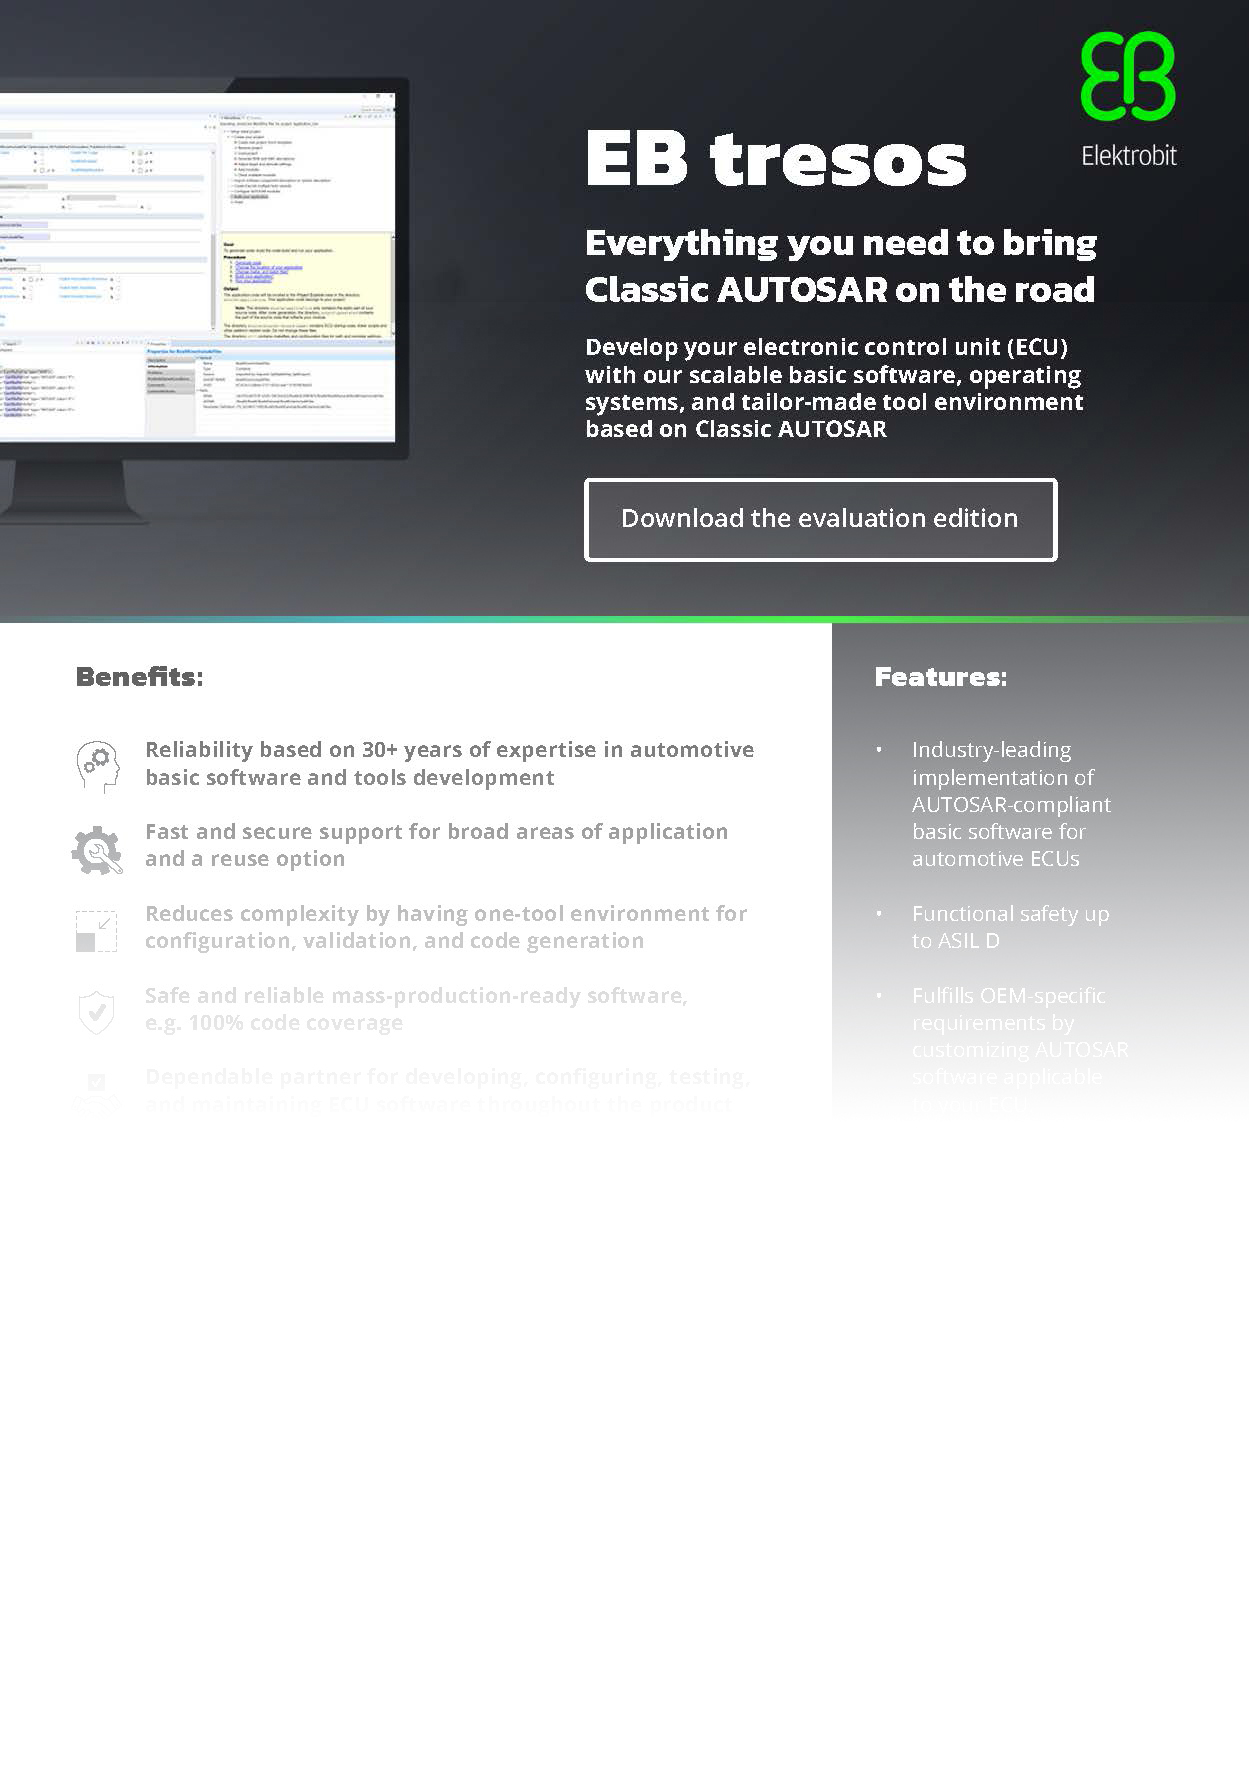 Customized Classic AUTOSAR solutions infosheet